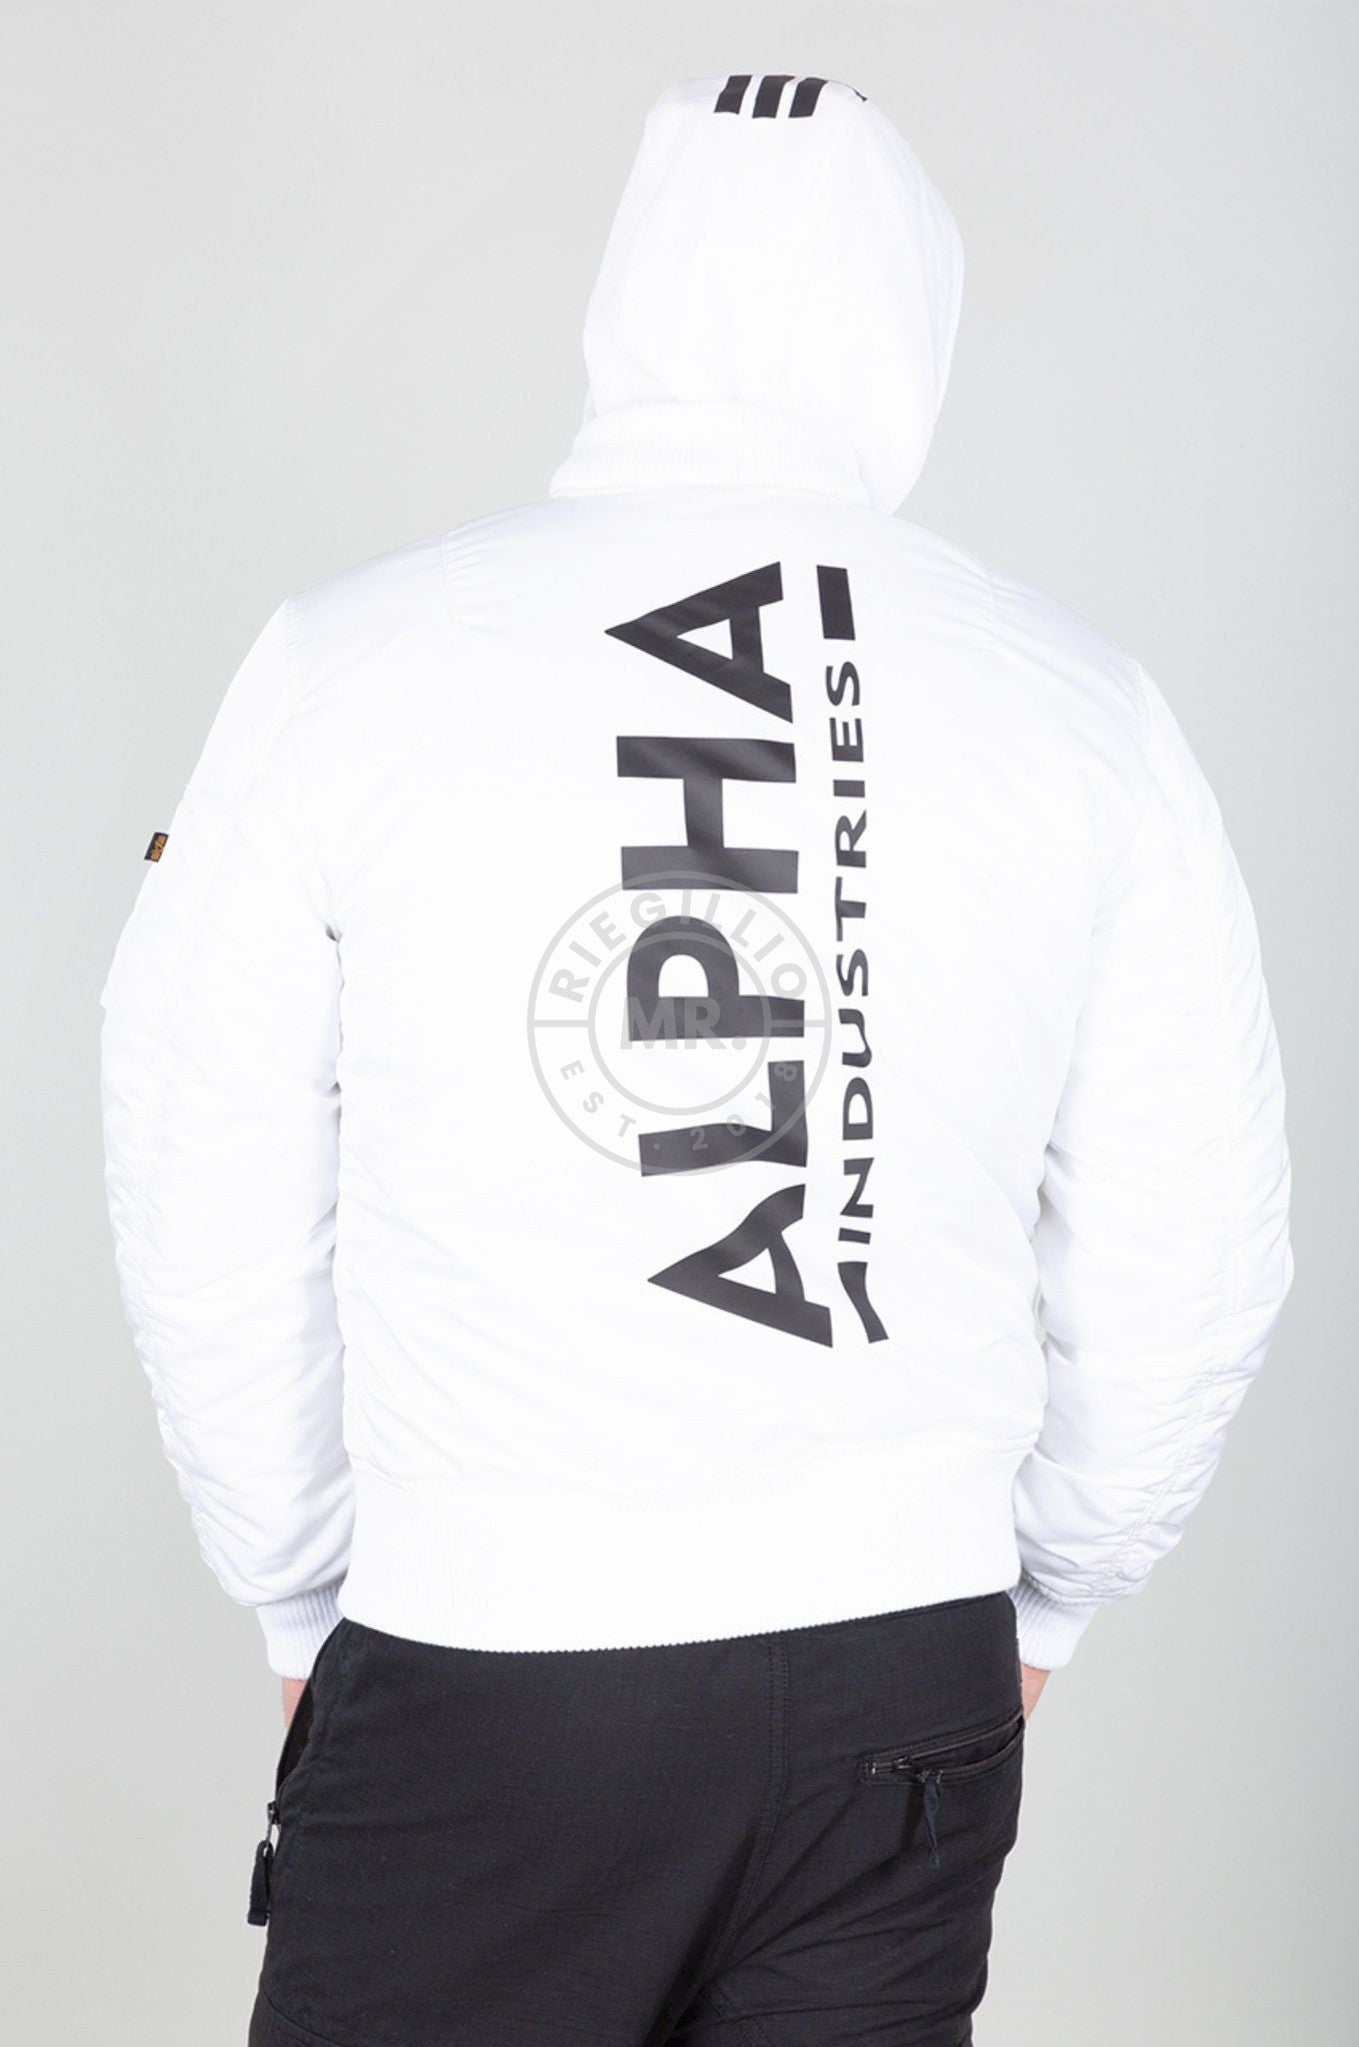 Alpha Industries MA-1 Back at - ZH / MR. Black Riegillio Jacket Print White